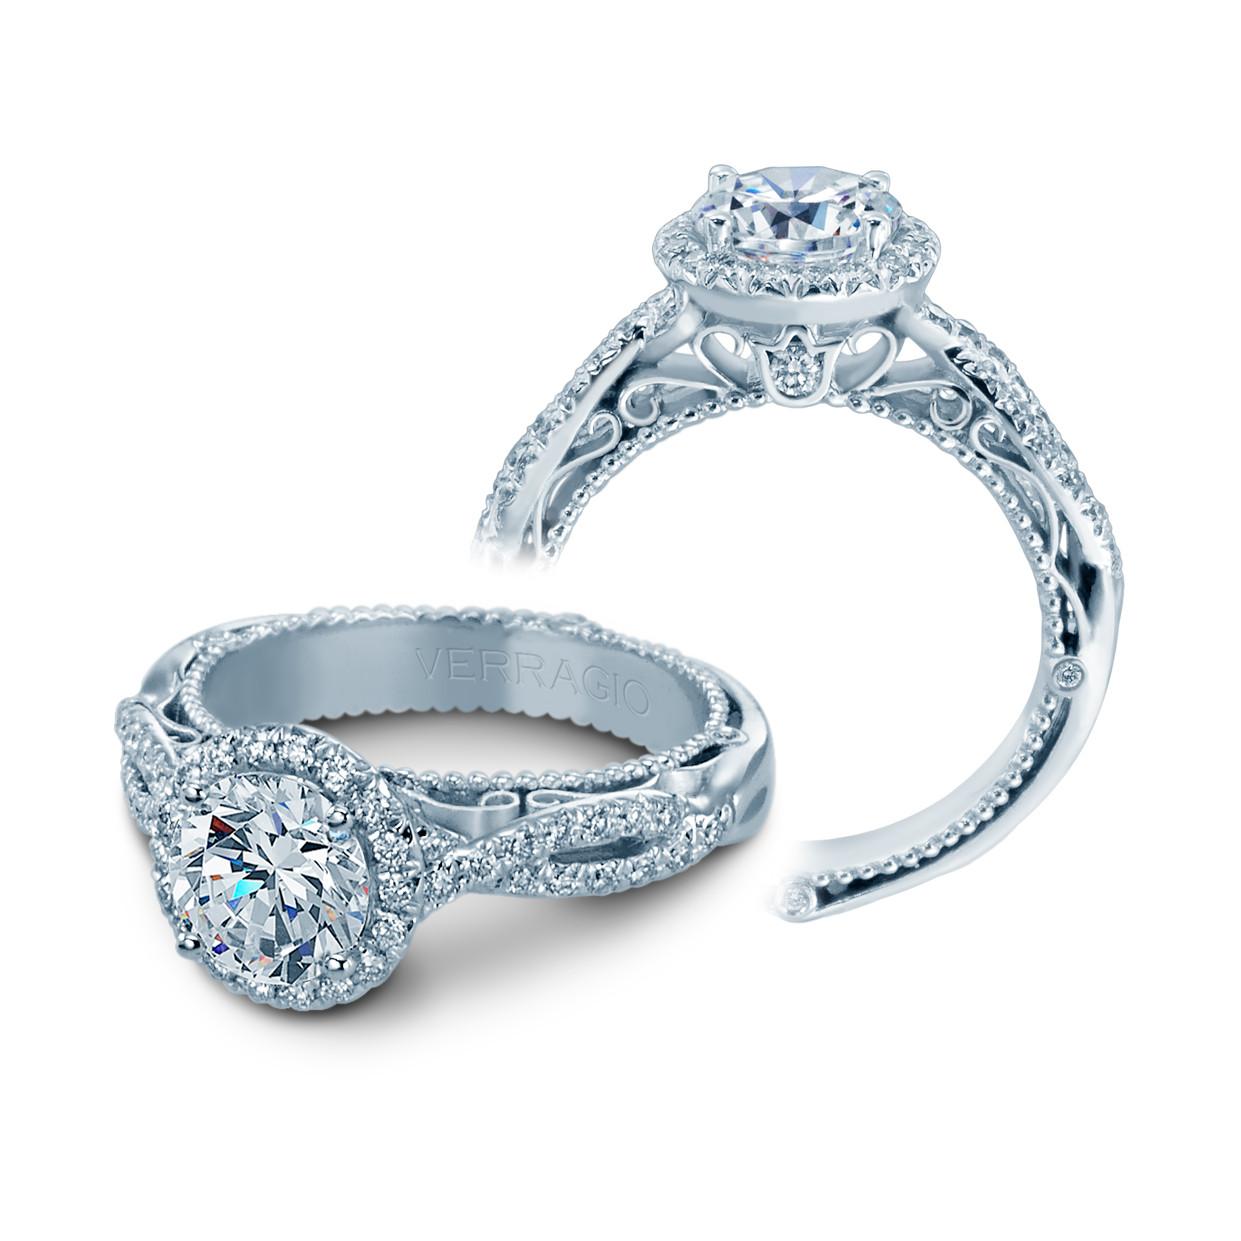 Verragio Wedding Rings
 Verragio Engagement Rings Gold 0 35CTW Diamond Mounting